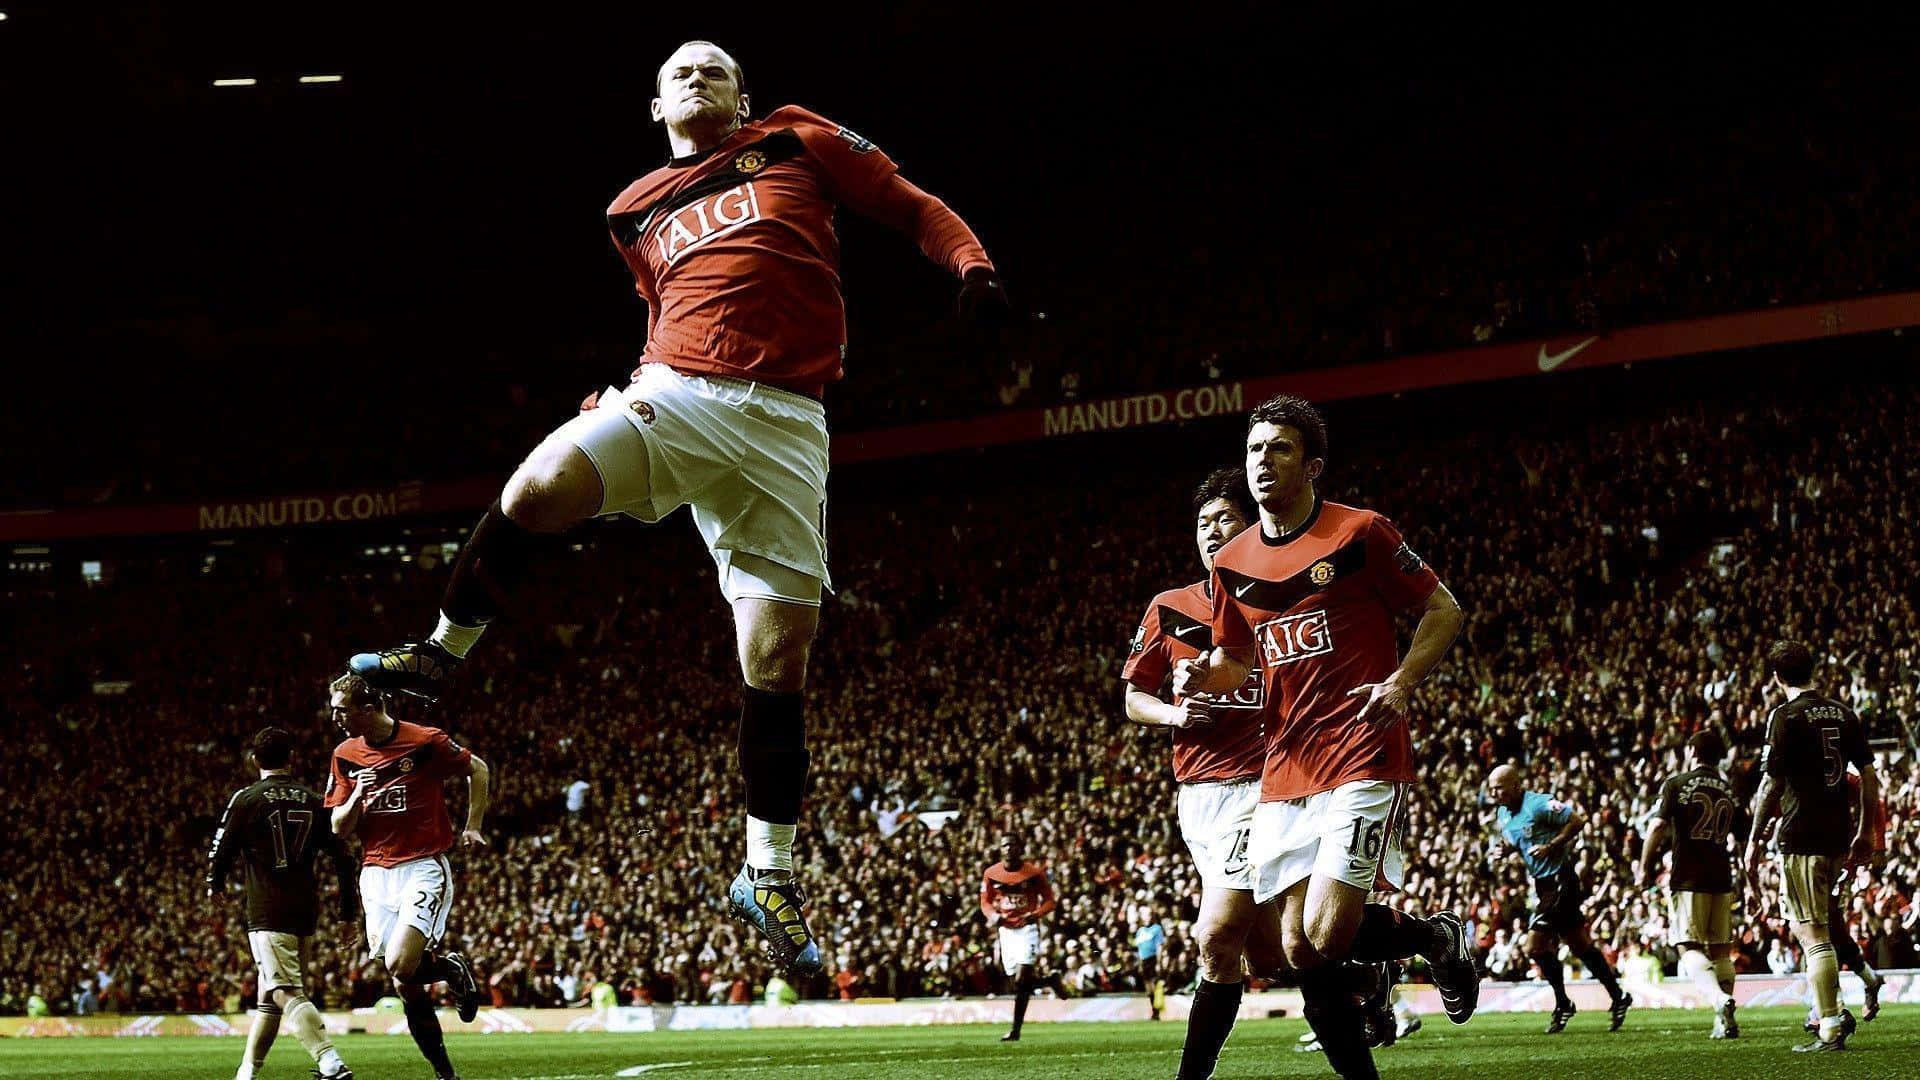 Wayne Rooney, Professional Football Player